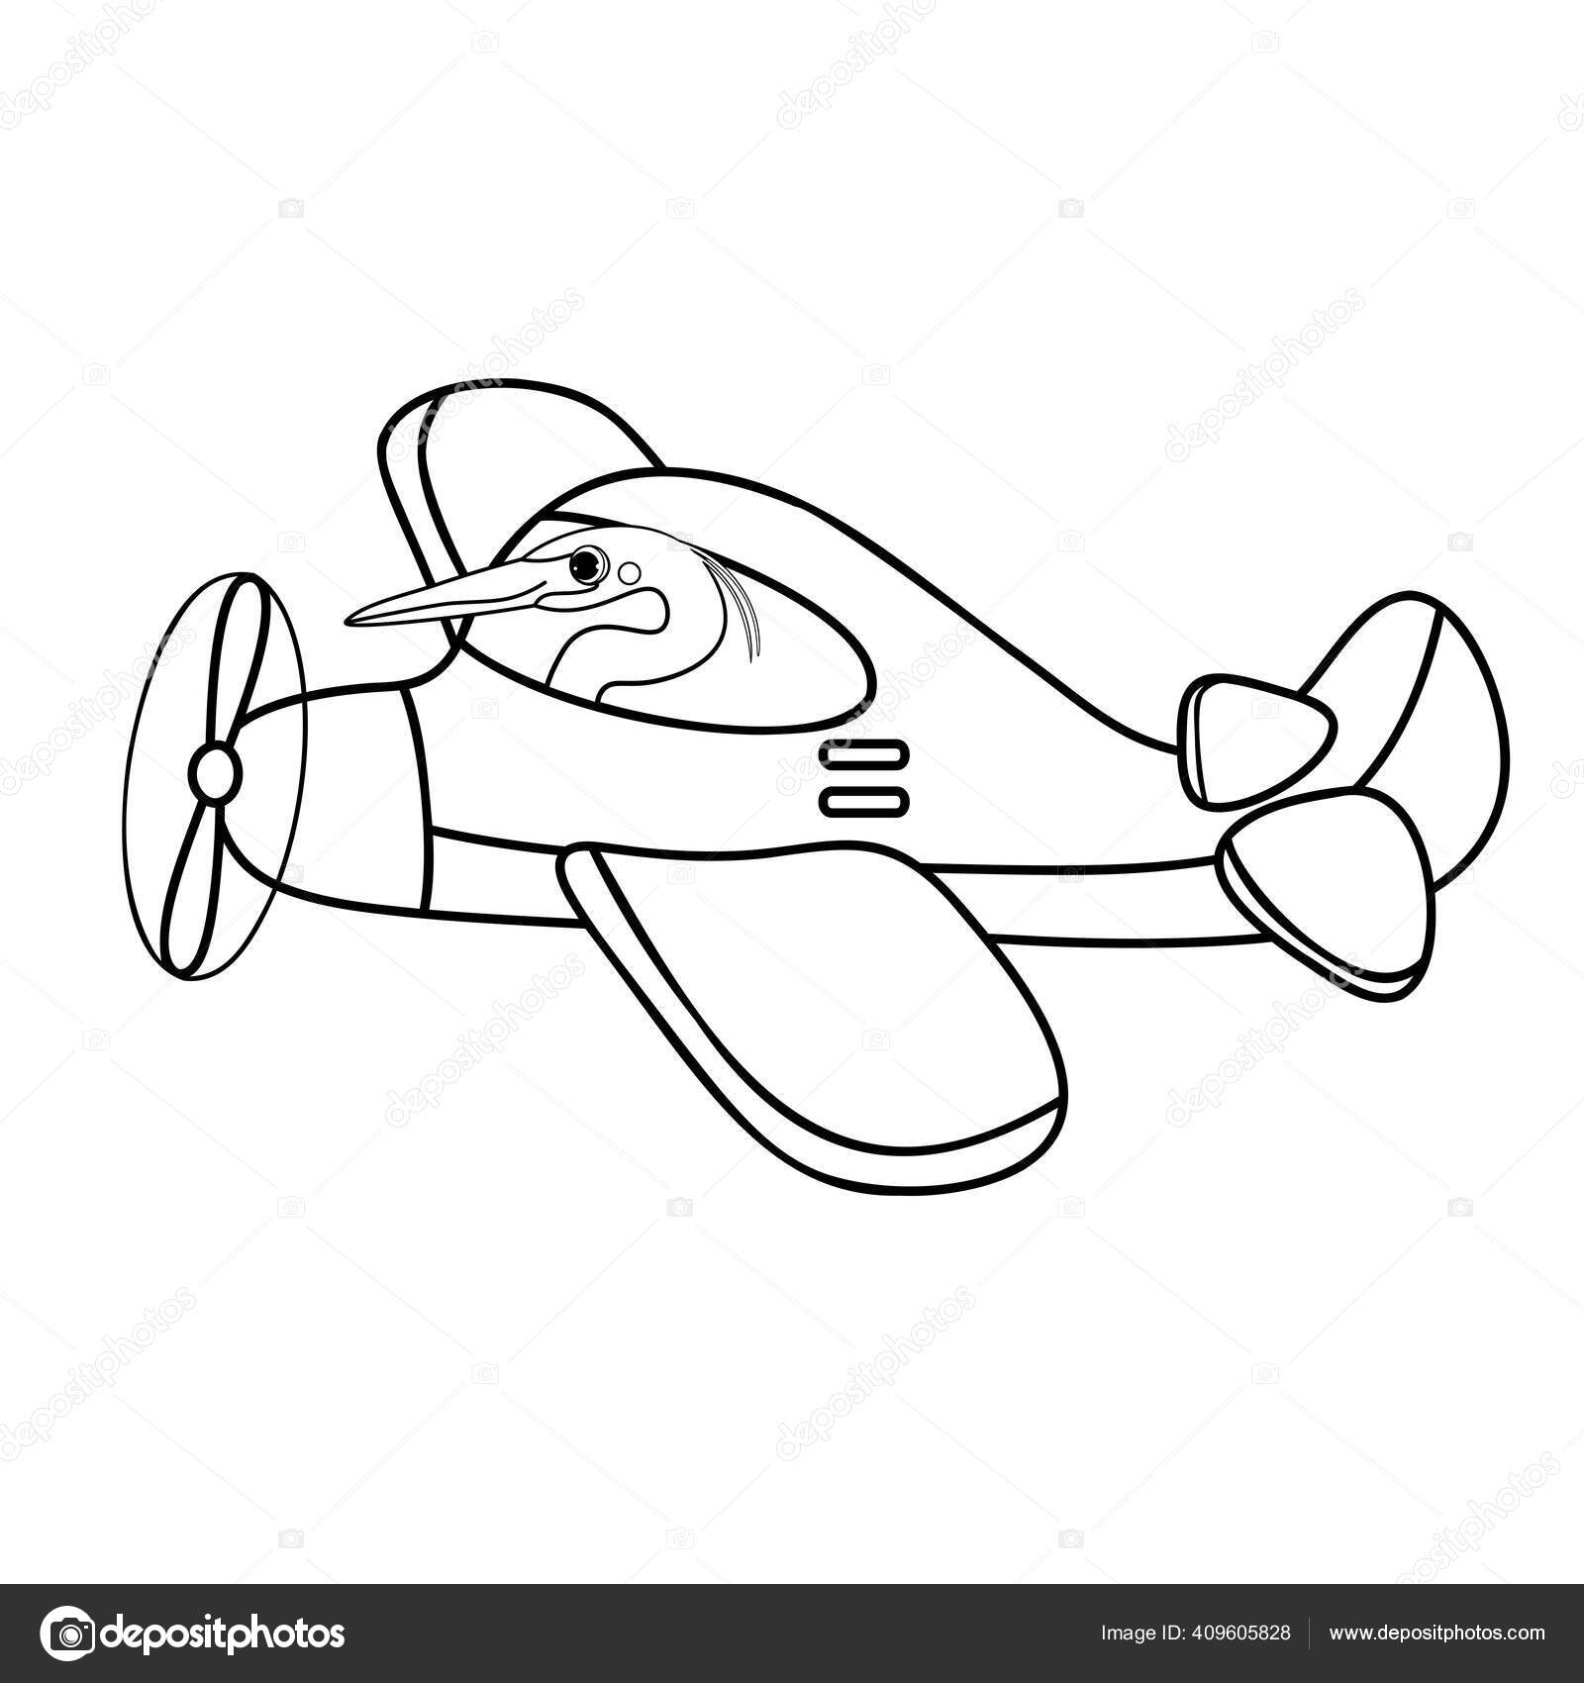 Vliegtuig Met Propelleromtrek Kleurplaat